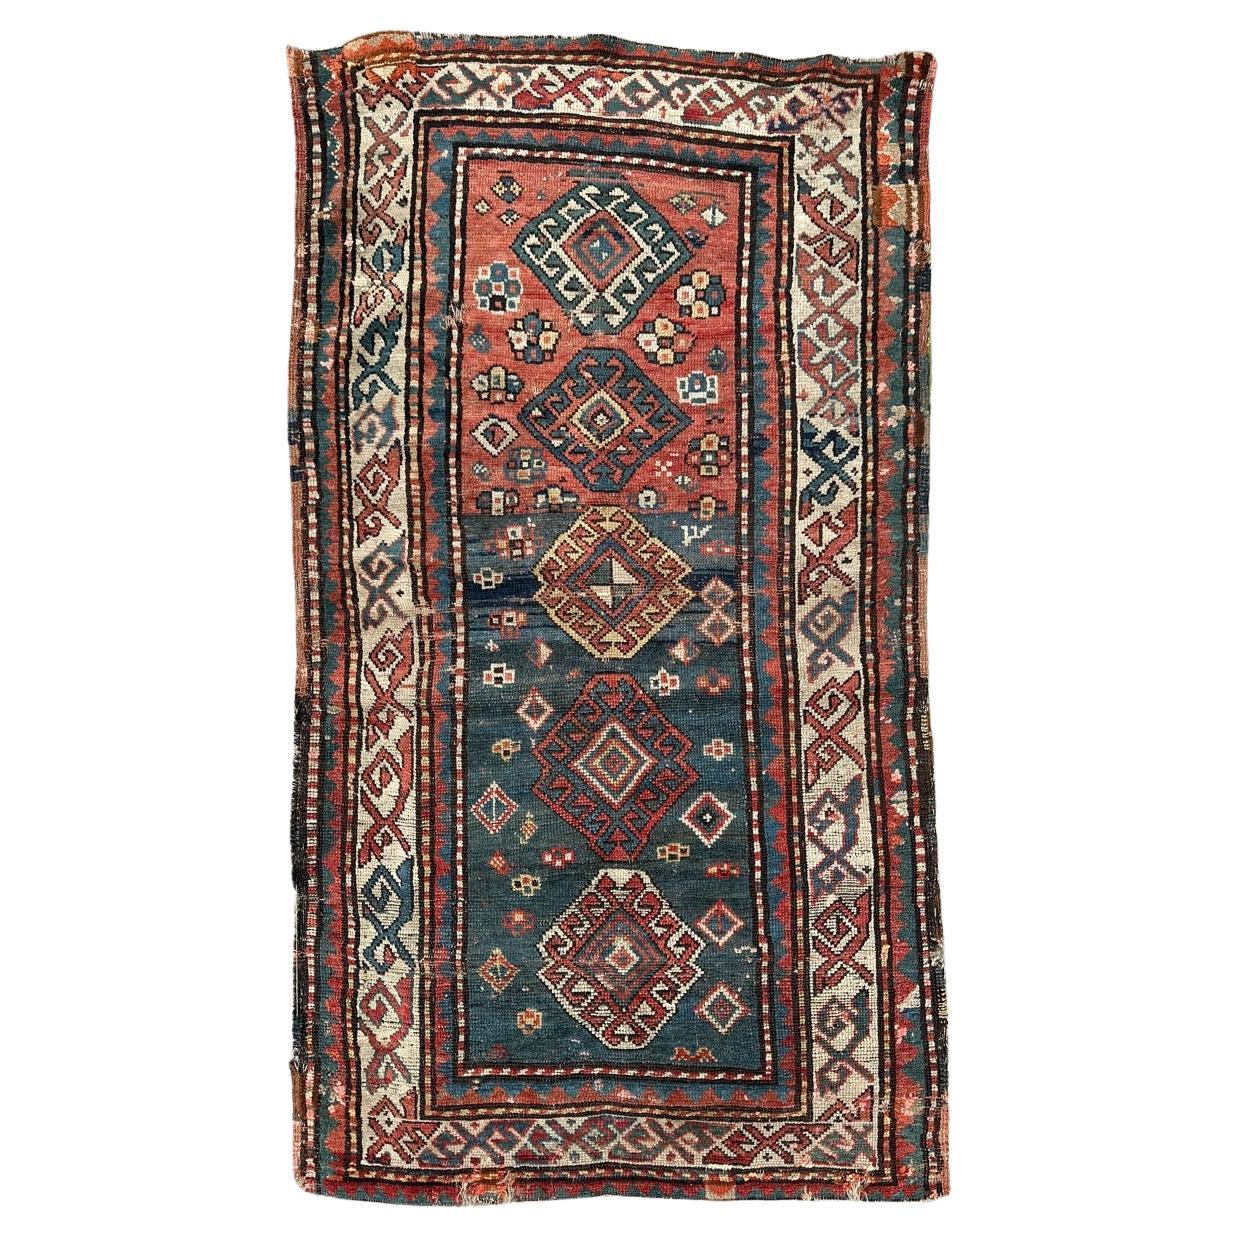 Le joli tapis kazak antique de Bobyrug